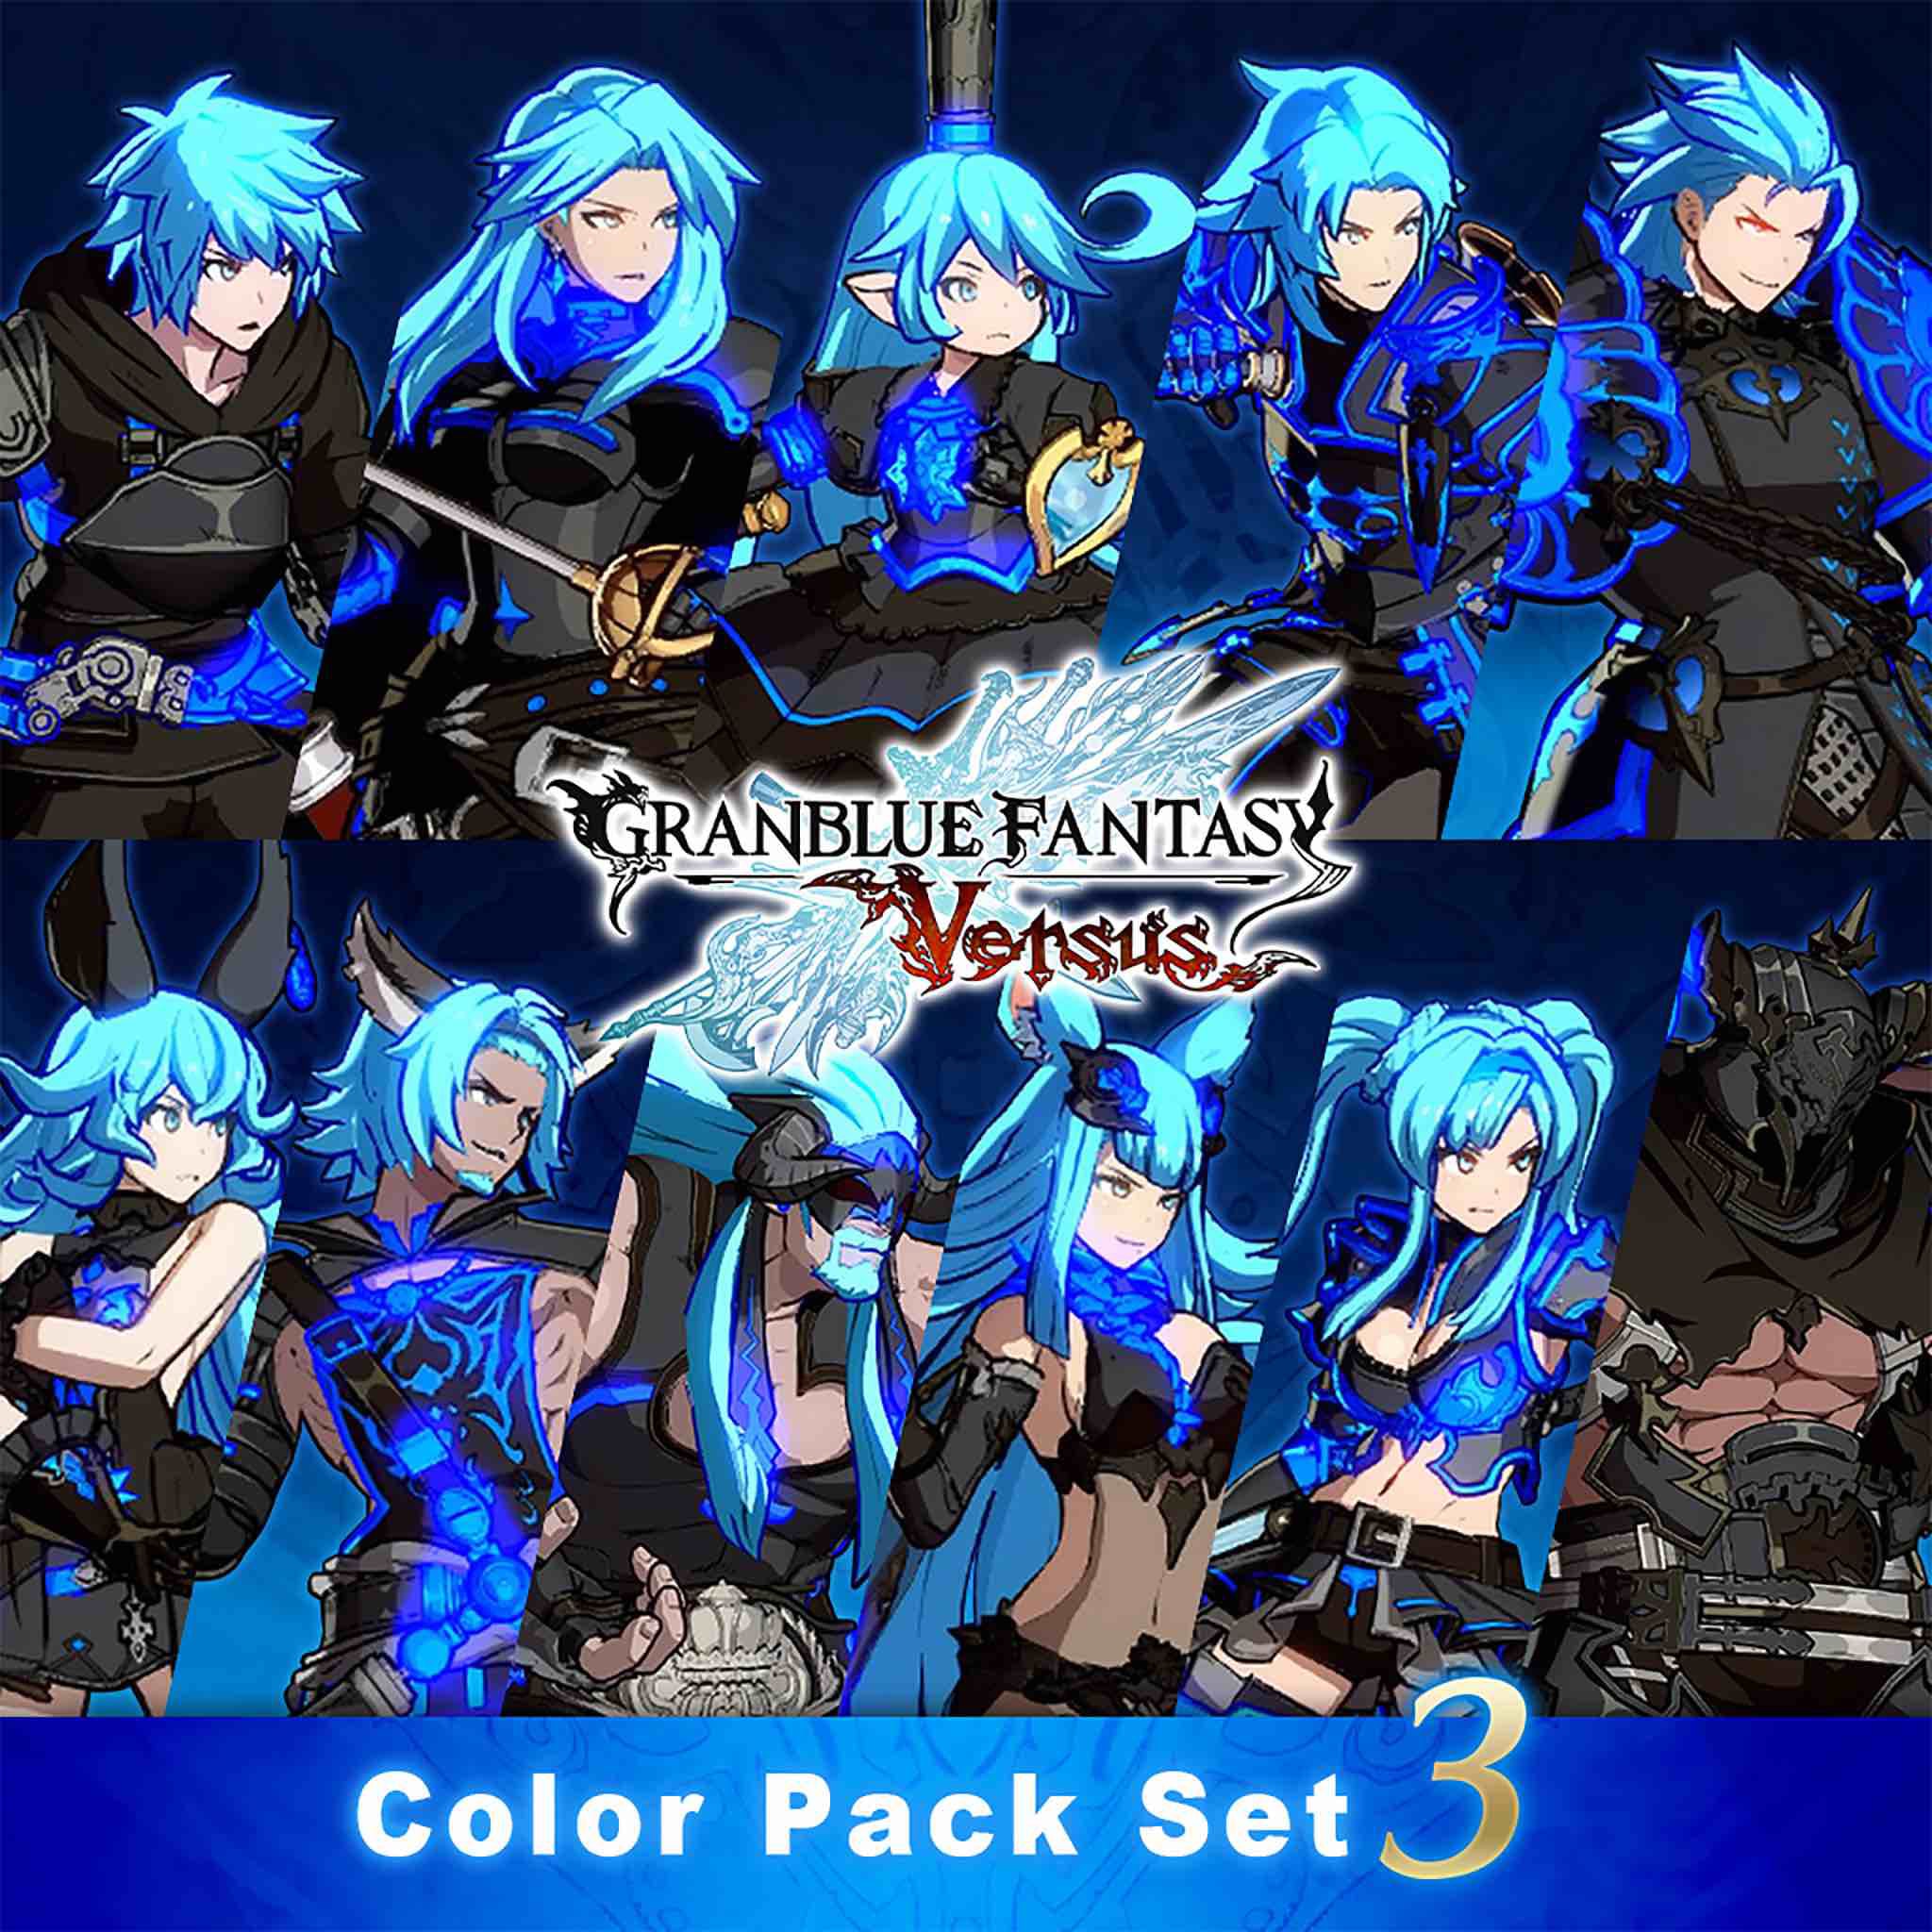 Granblue Fantasy: Versus - Color Pack 3